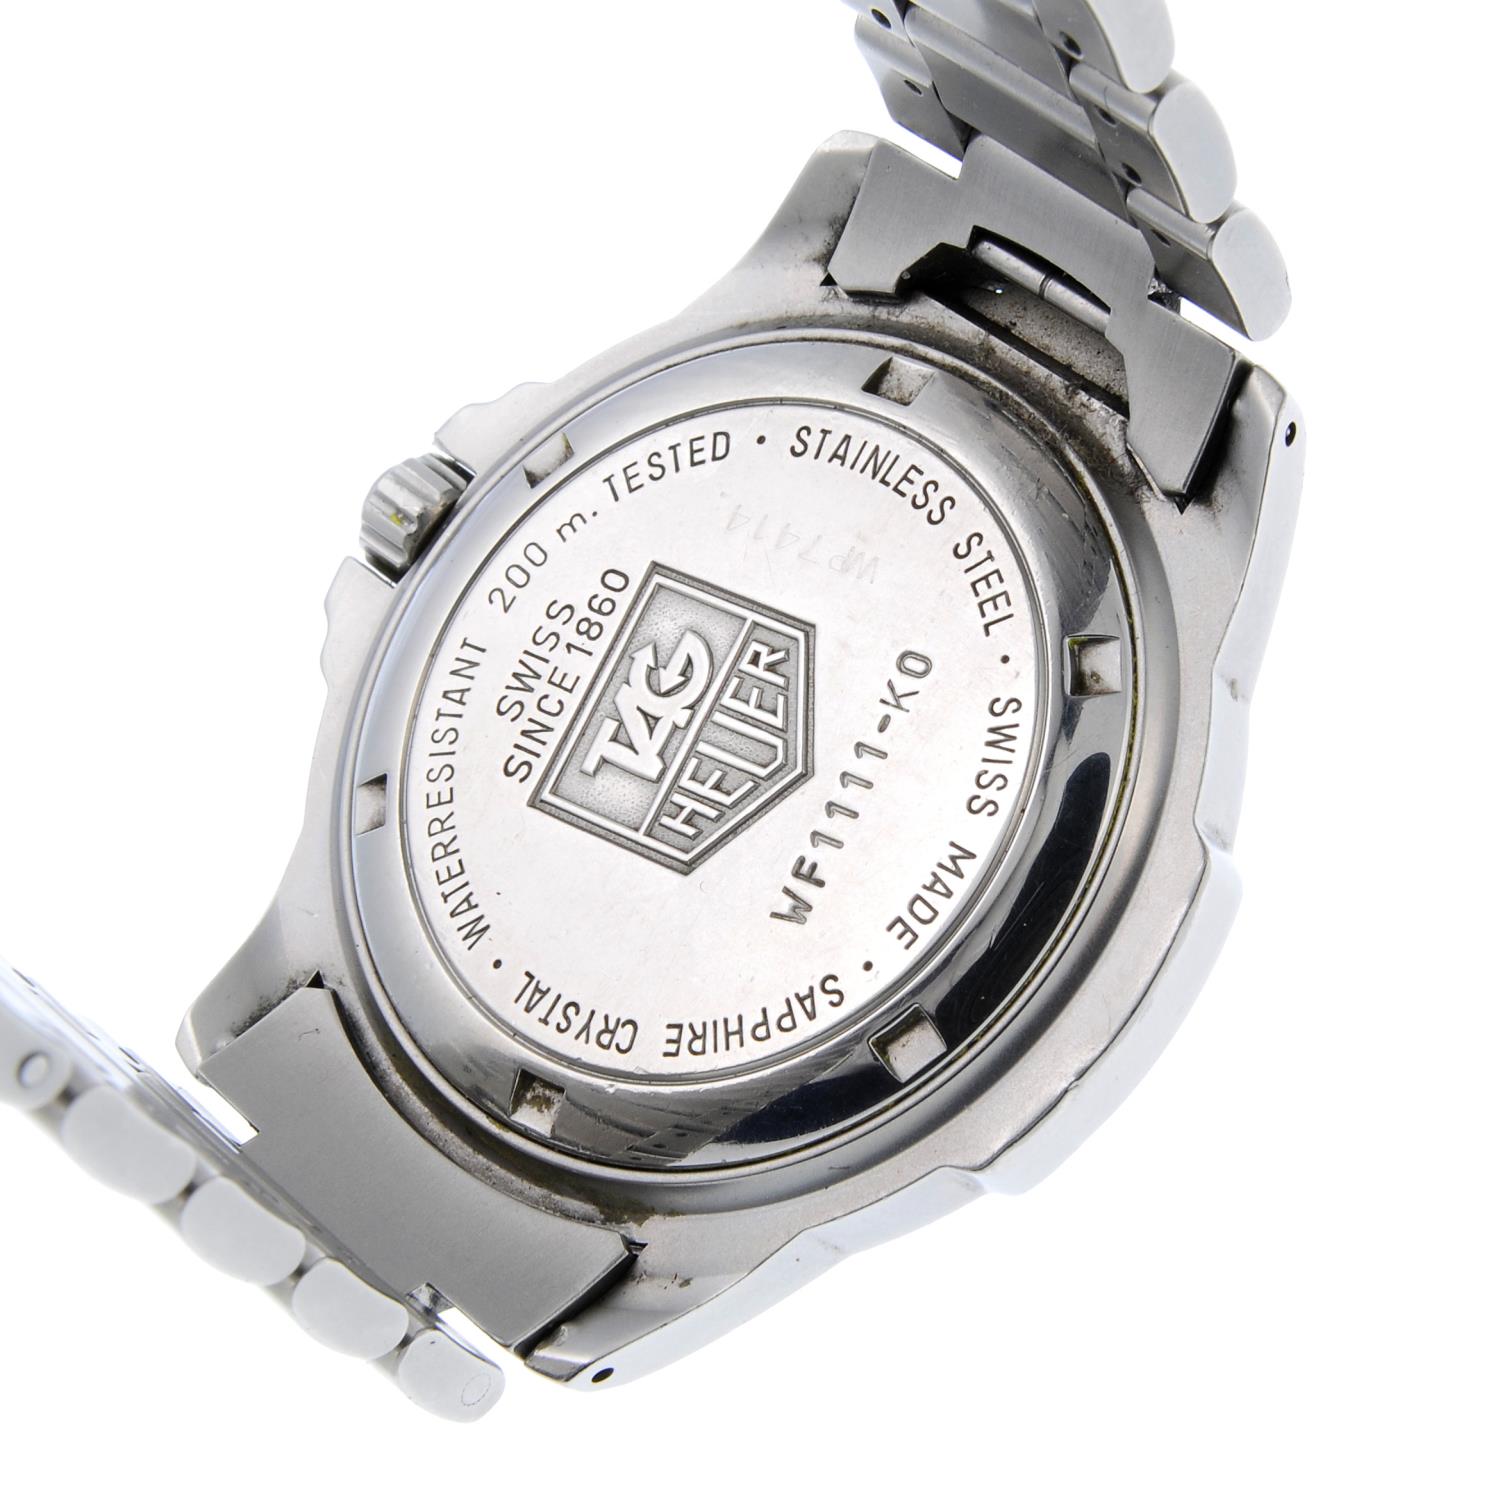 TAG HEUER - a gentleman's 4000 Series bracelet watch. - Image 4 of 4